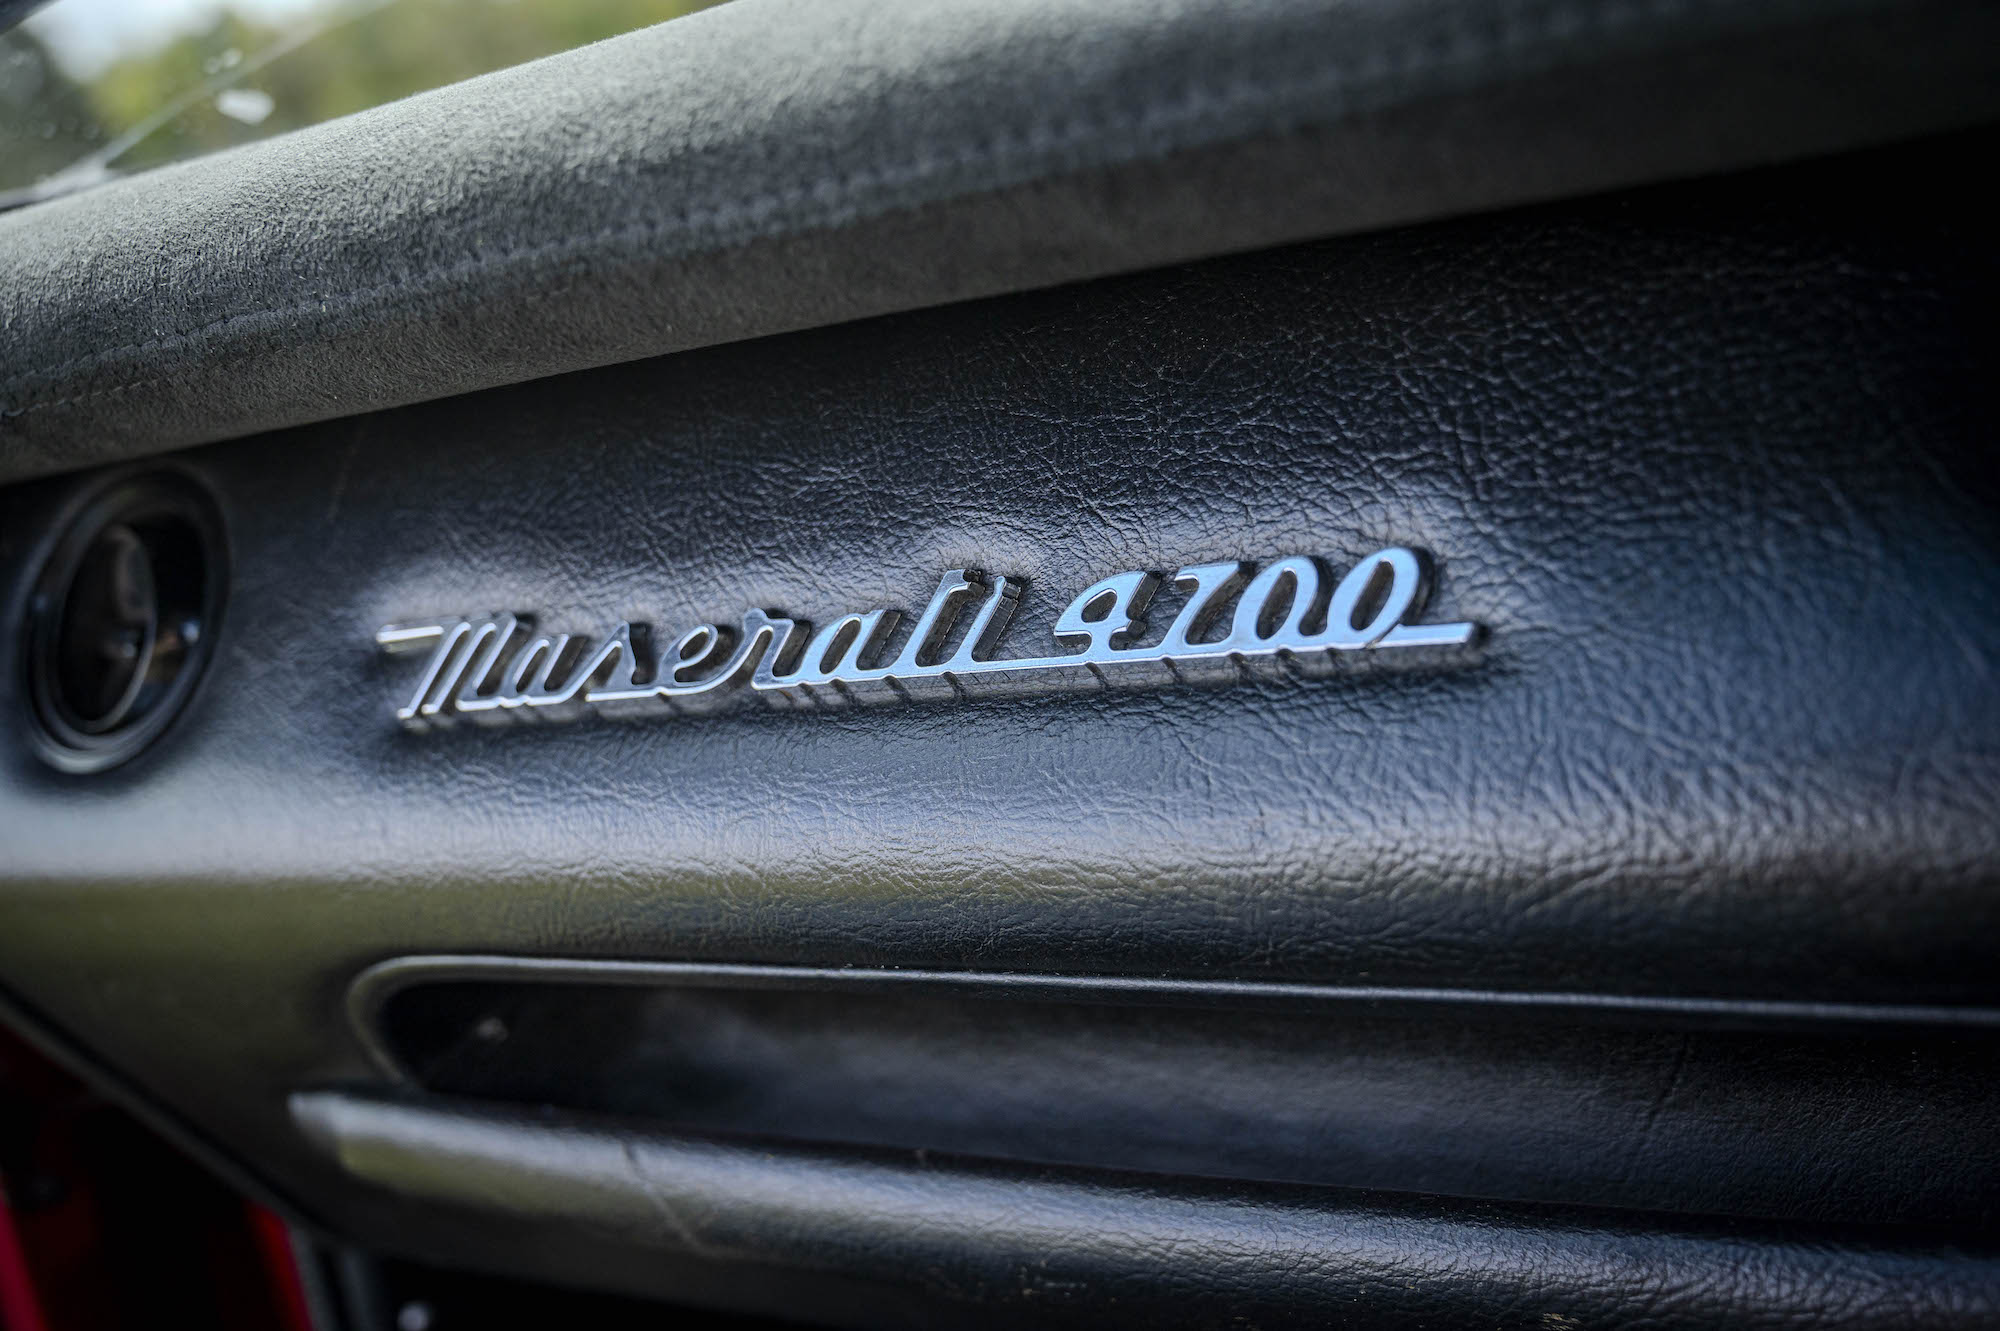 Maserati 4700 badge